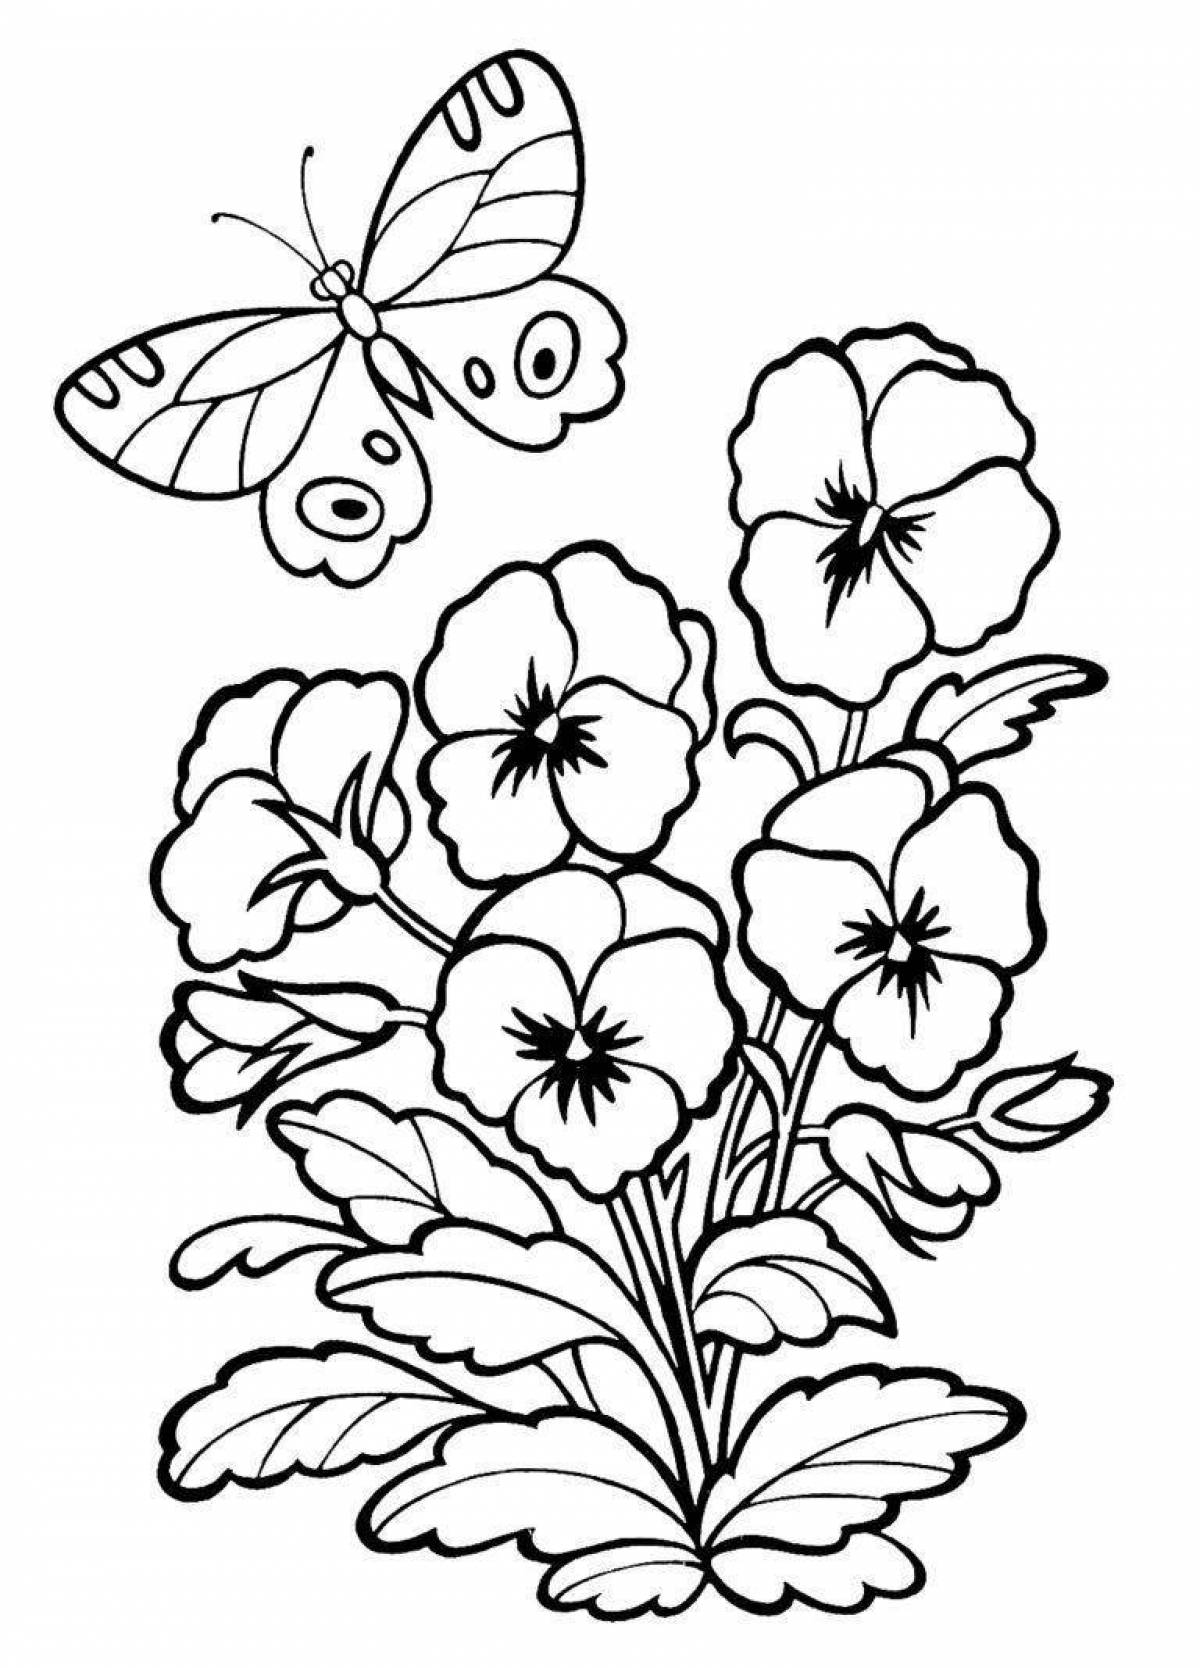 Great geranium coloring book for babies